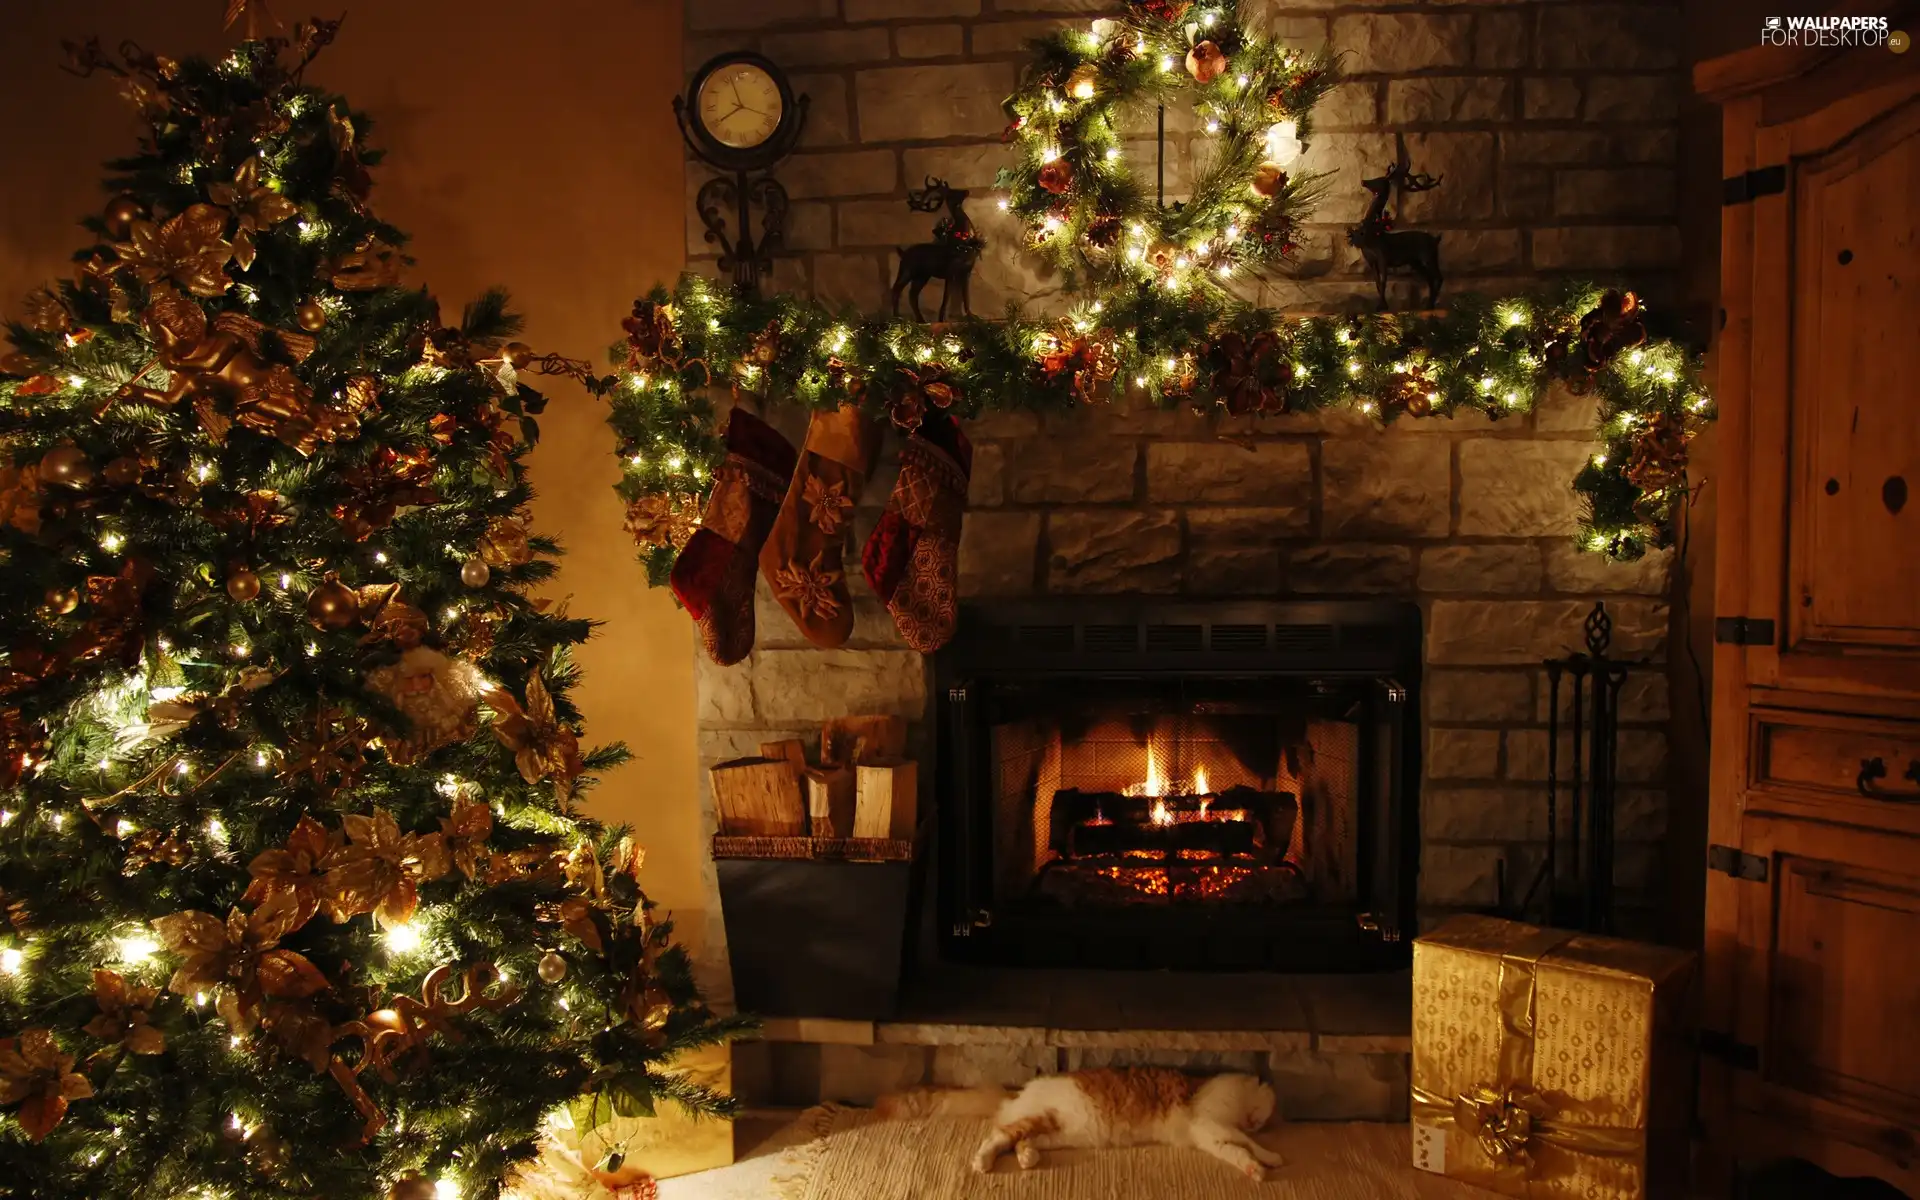 cat, christmas tree, Lights, socks, gifts, burner chimney